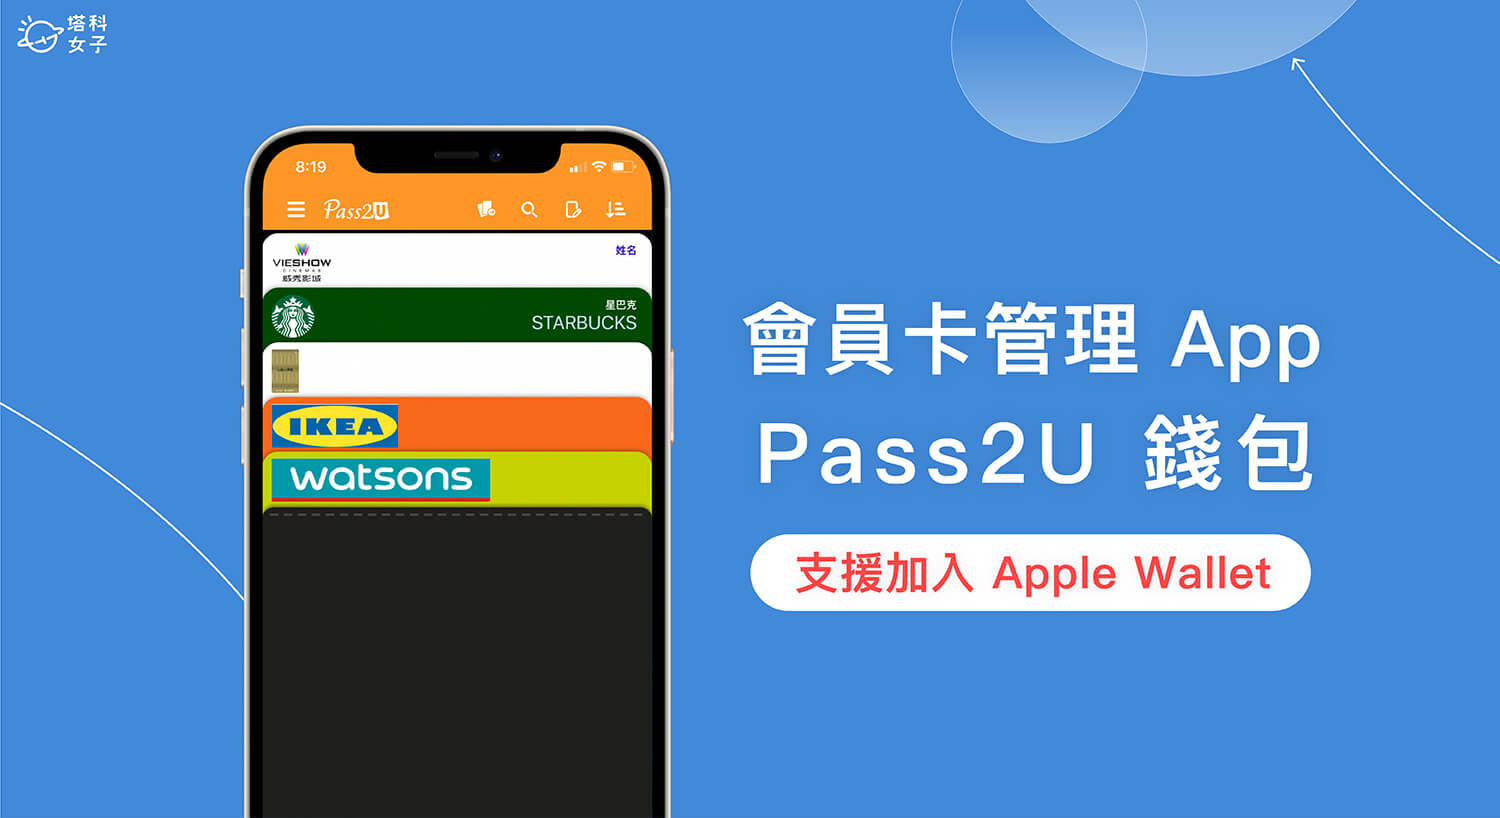 Pass2U 會員卡 App 一次管理各大商家會員卡，支援加入 Apple 錢包